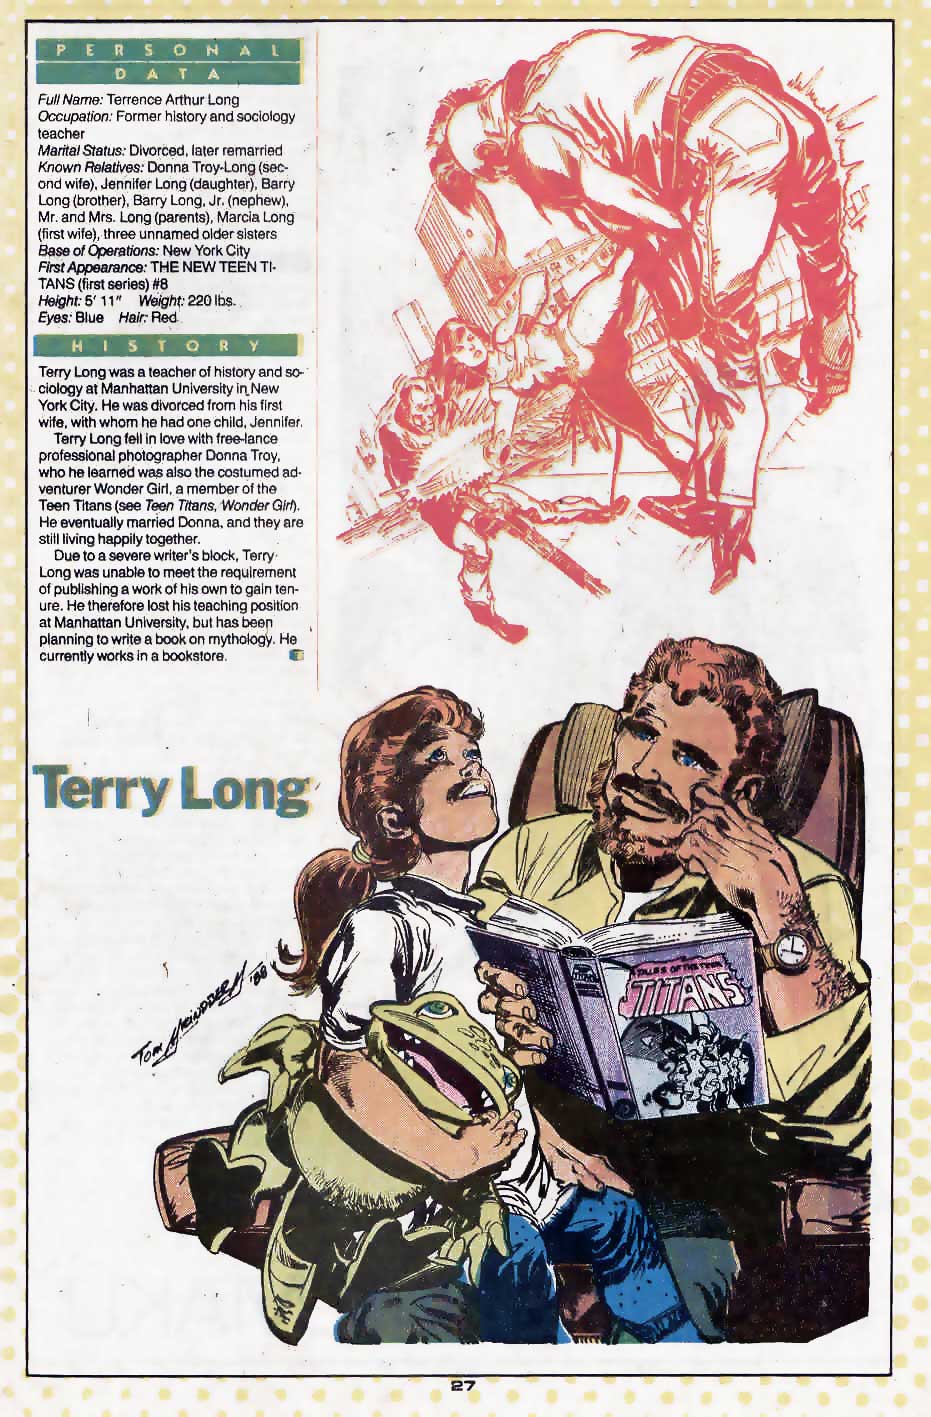 Terry Long by Tom Grindberg